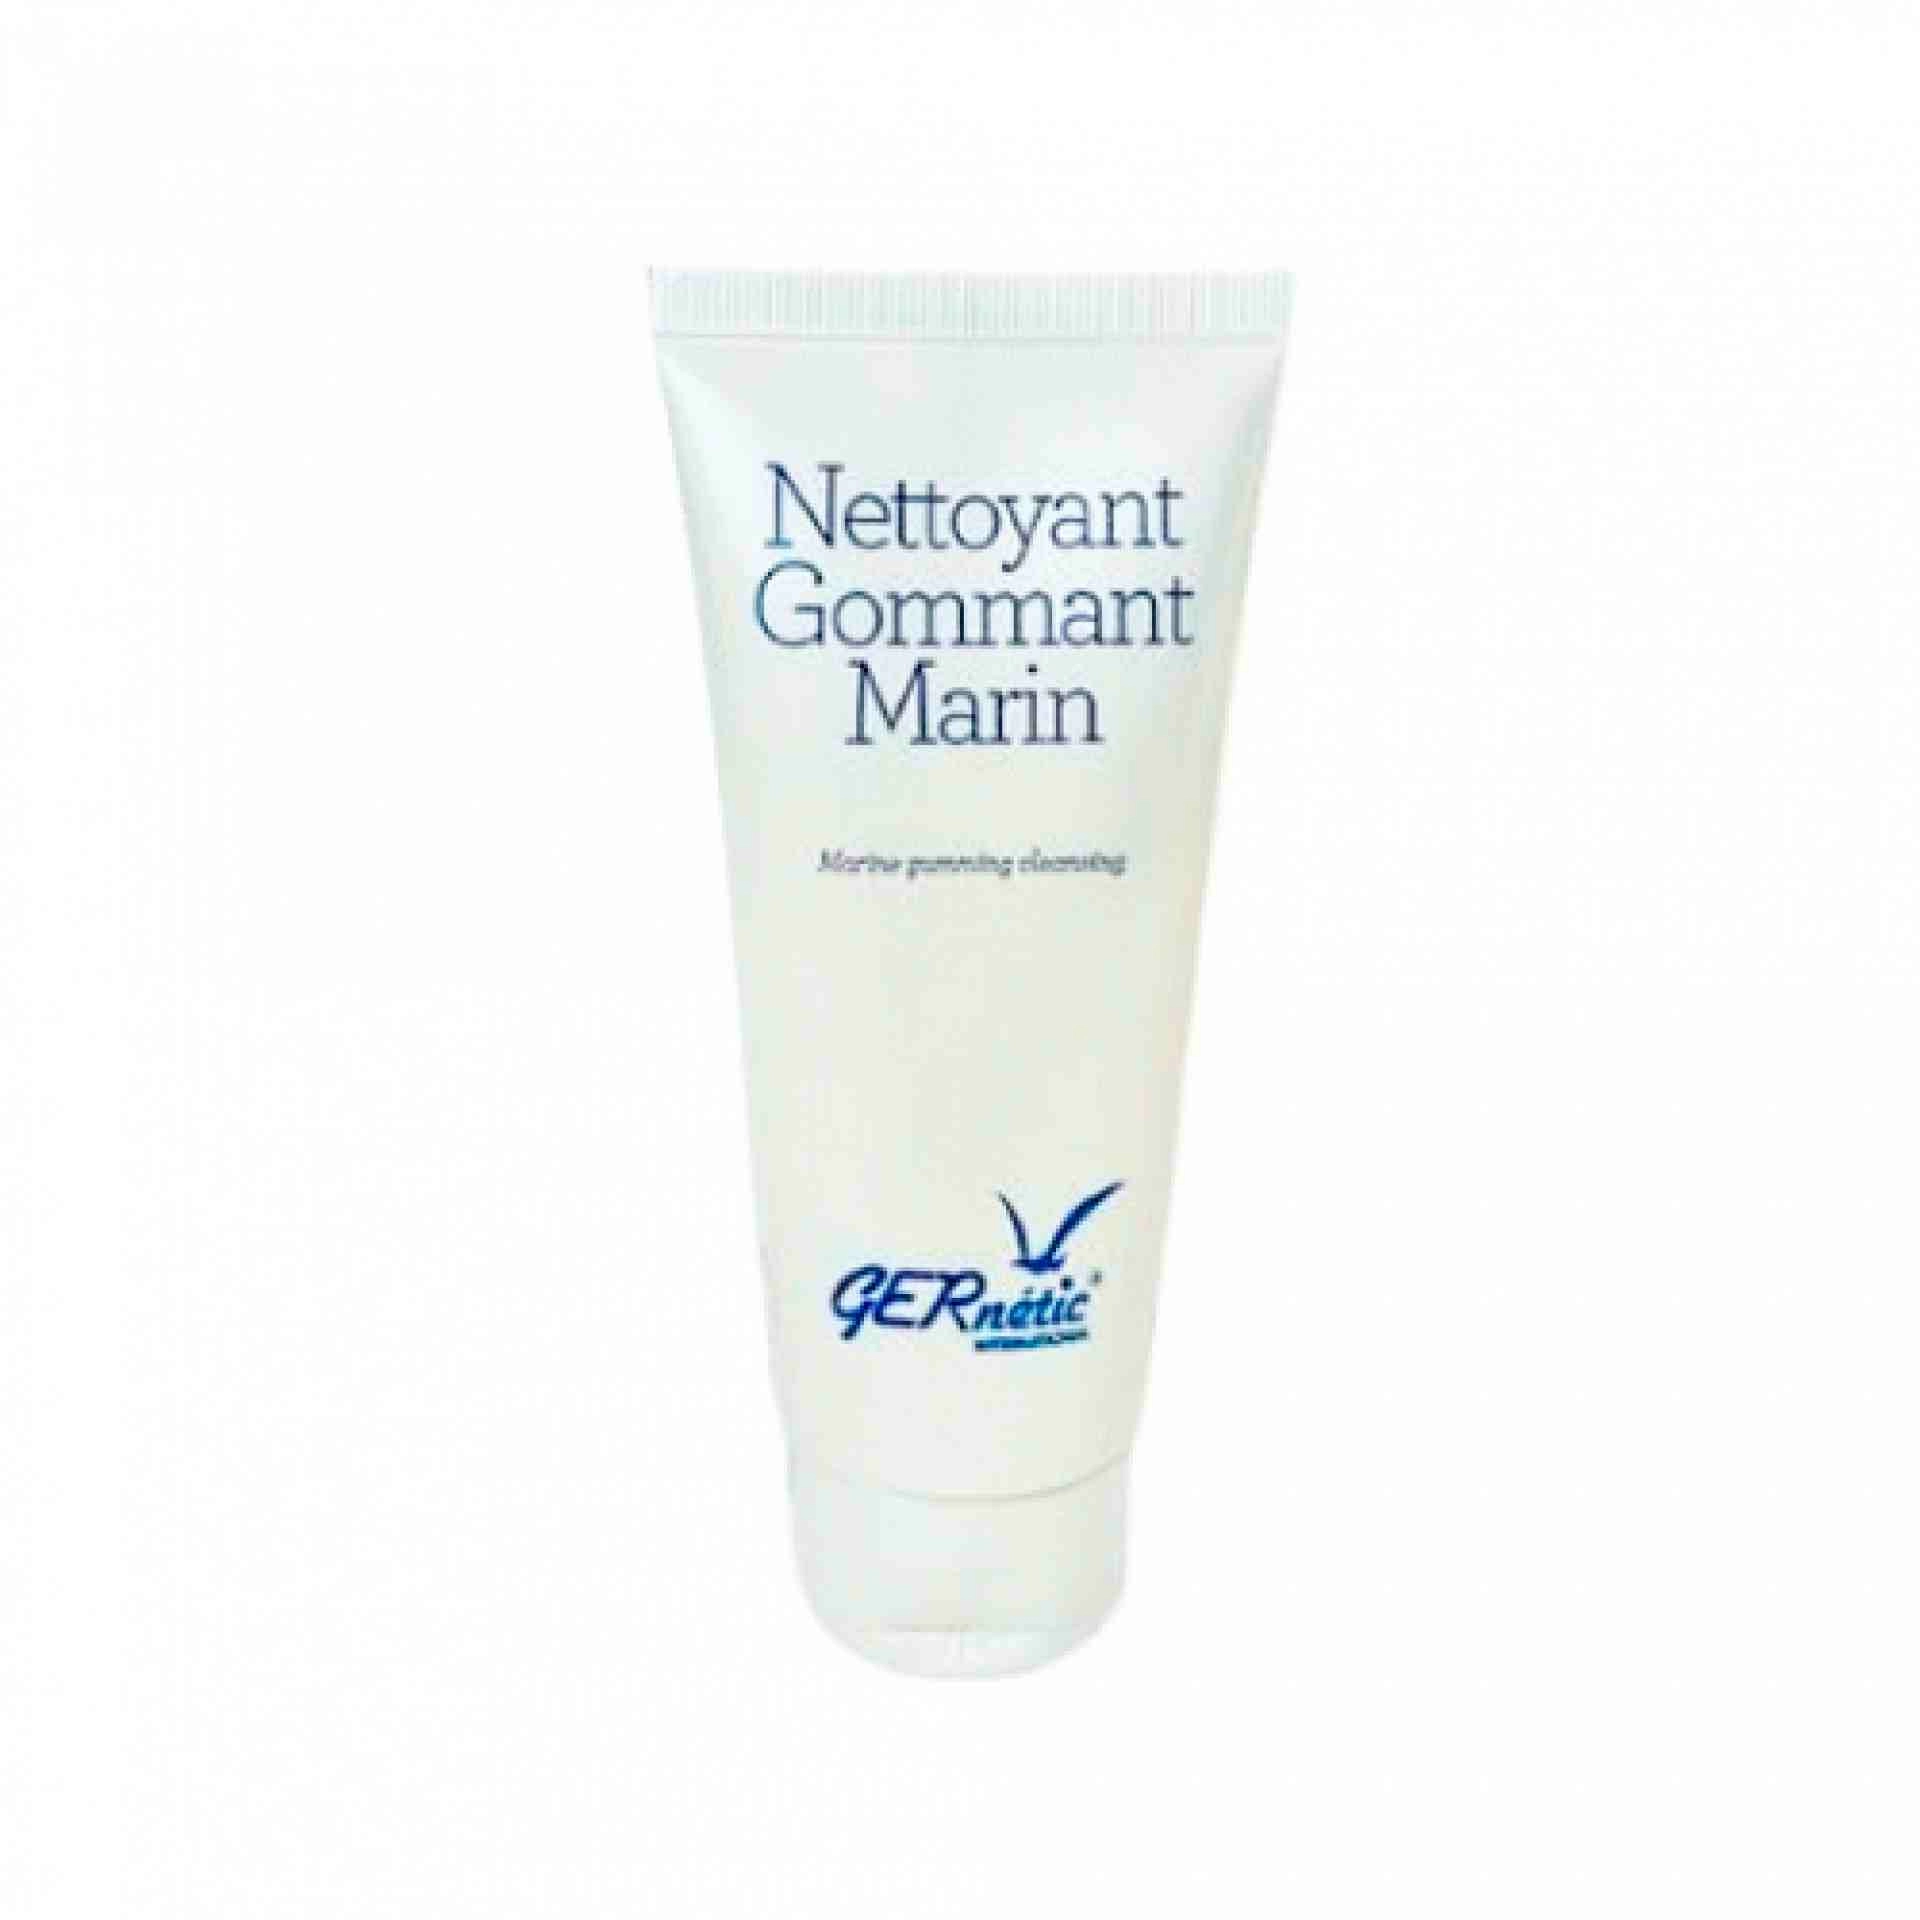 Nettoyant Gommant Marin | Gel facial - Marinos & Spa - Gernétic ®